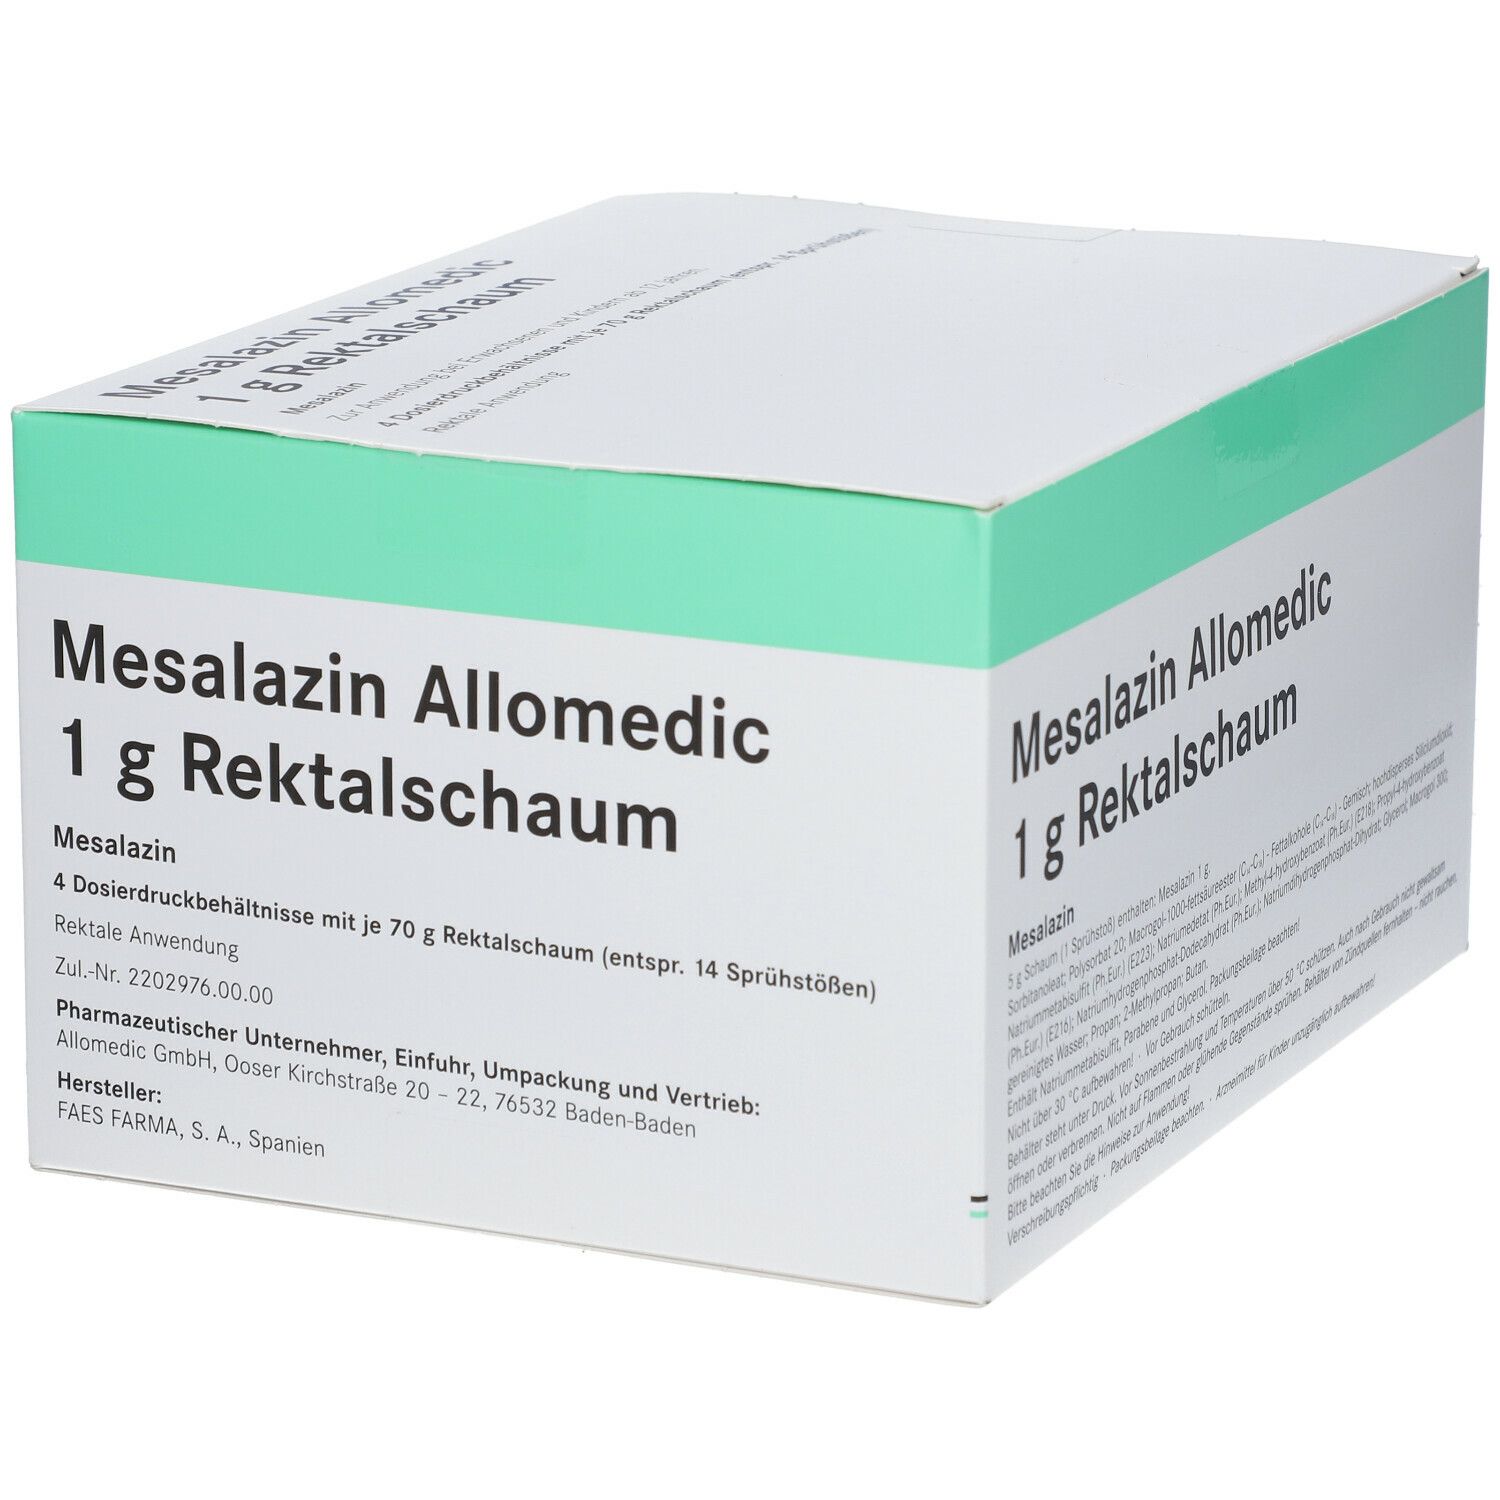 Mesalazin Allomedic 1 g